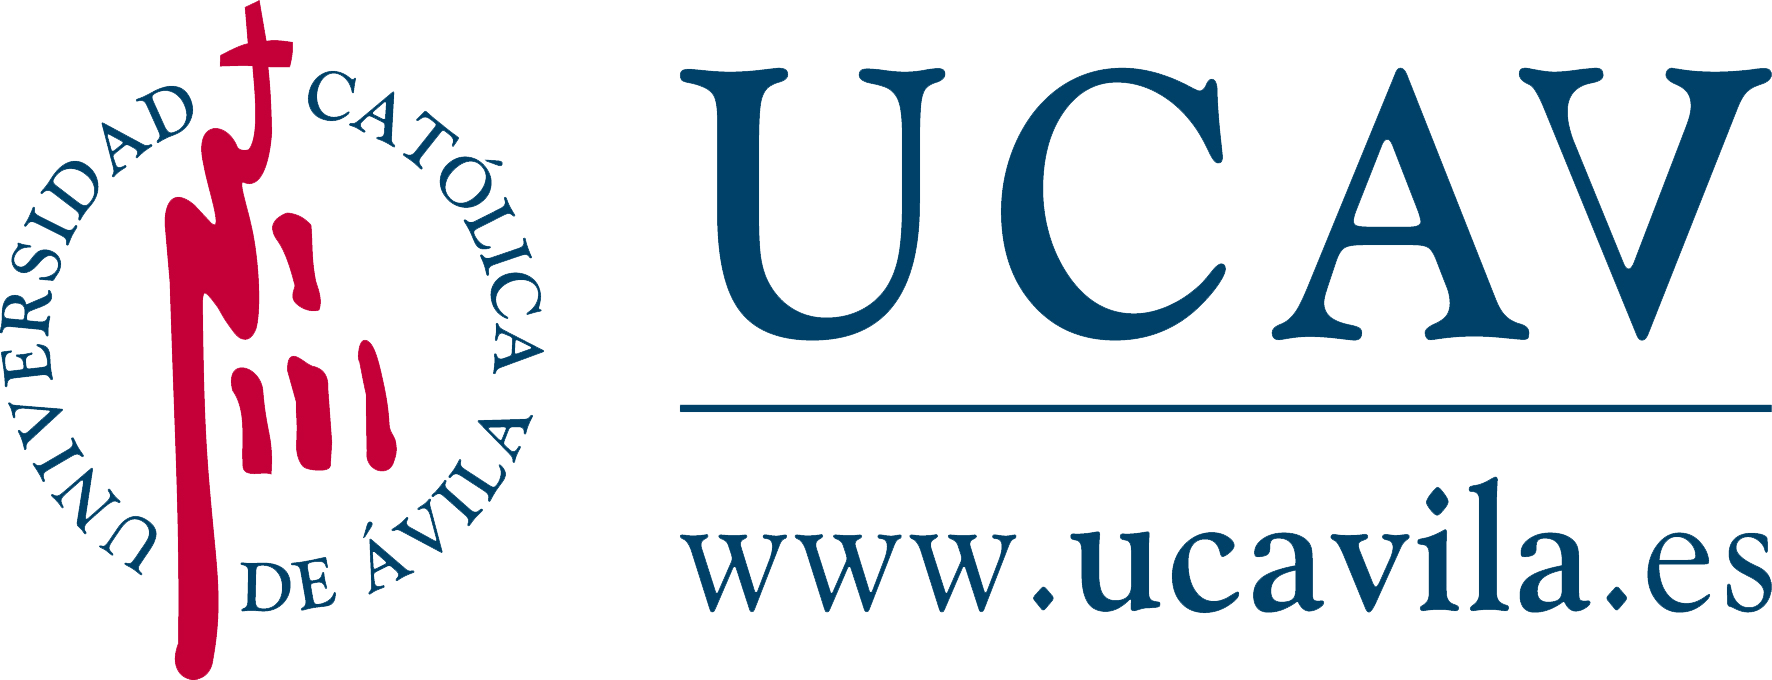 Catholic University of Ávila logo